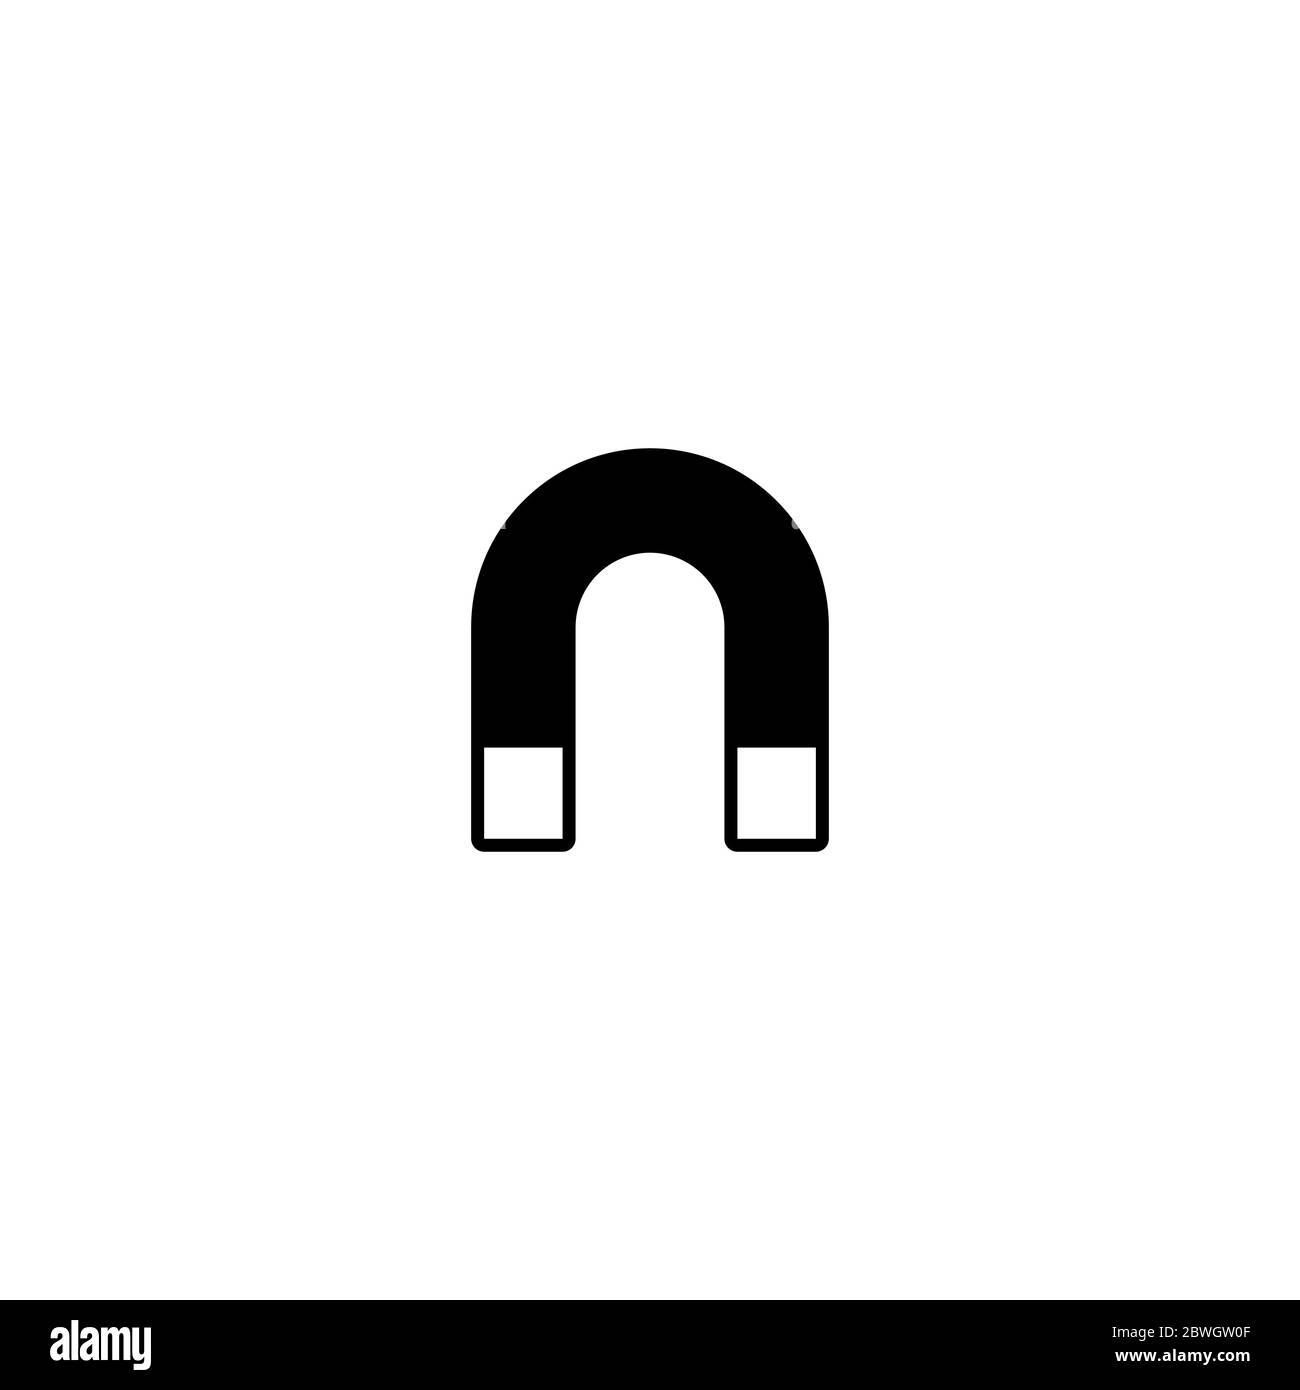 Black horseshoe magnet with magnetic power icon isolated on white